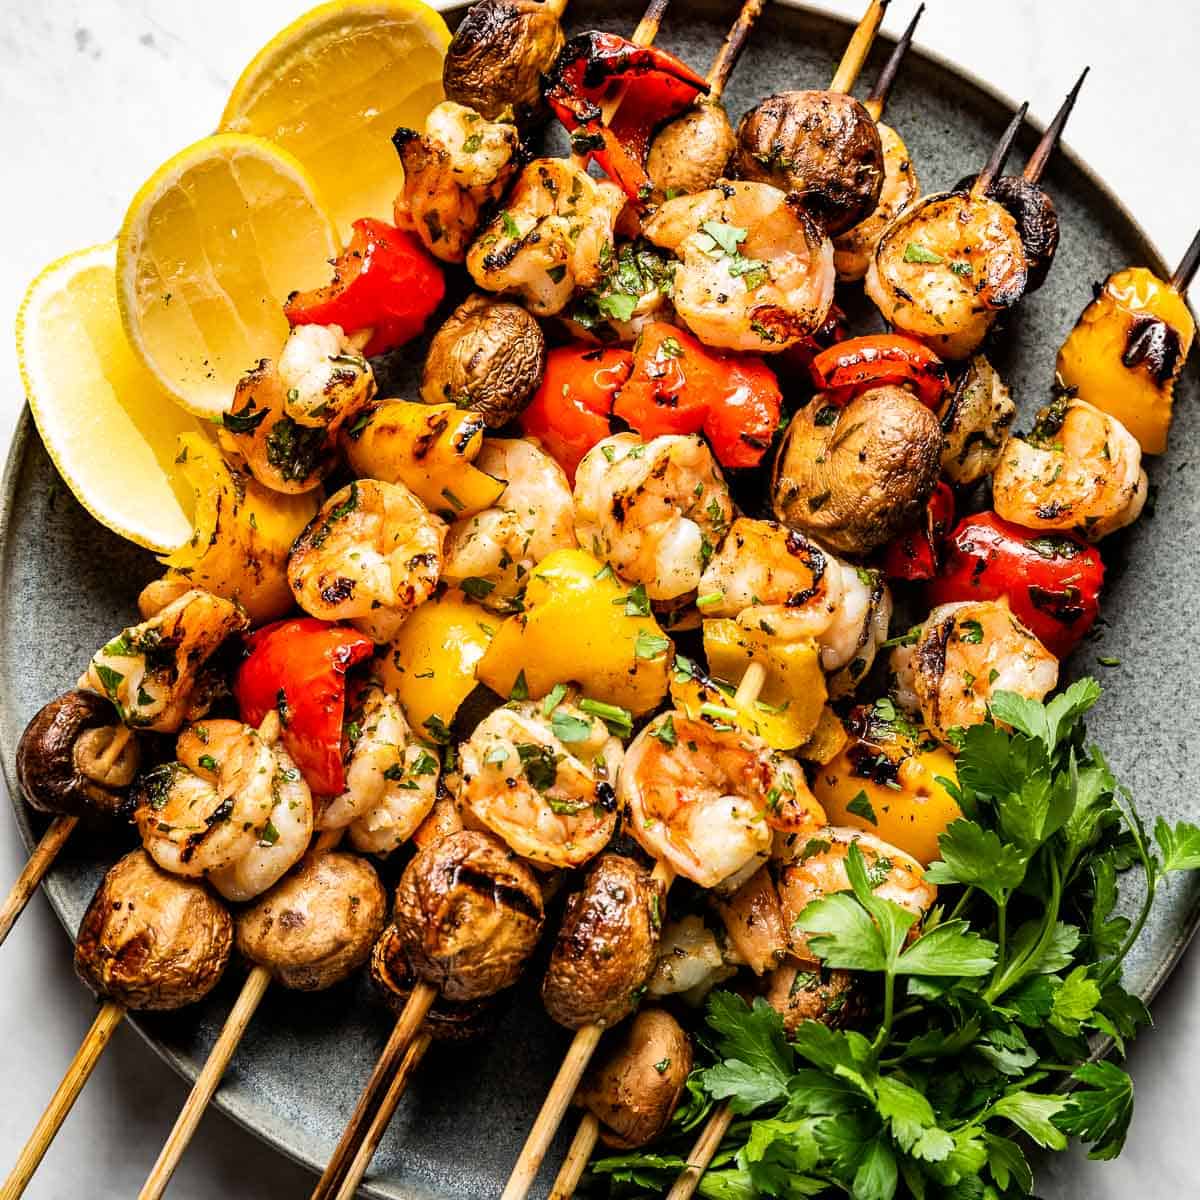 https://foolproofliving.com/wp-content/uploads/2021/08/Grilled-Shrimp-Kabobs-with-Vegetables-recipe-image.jpg